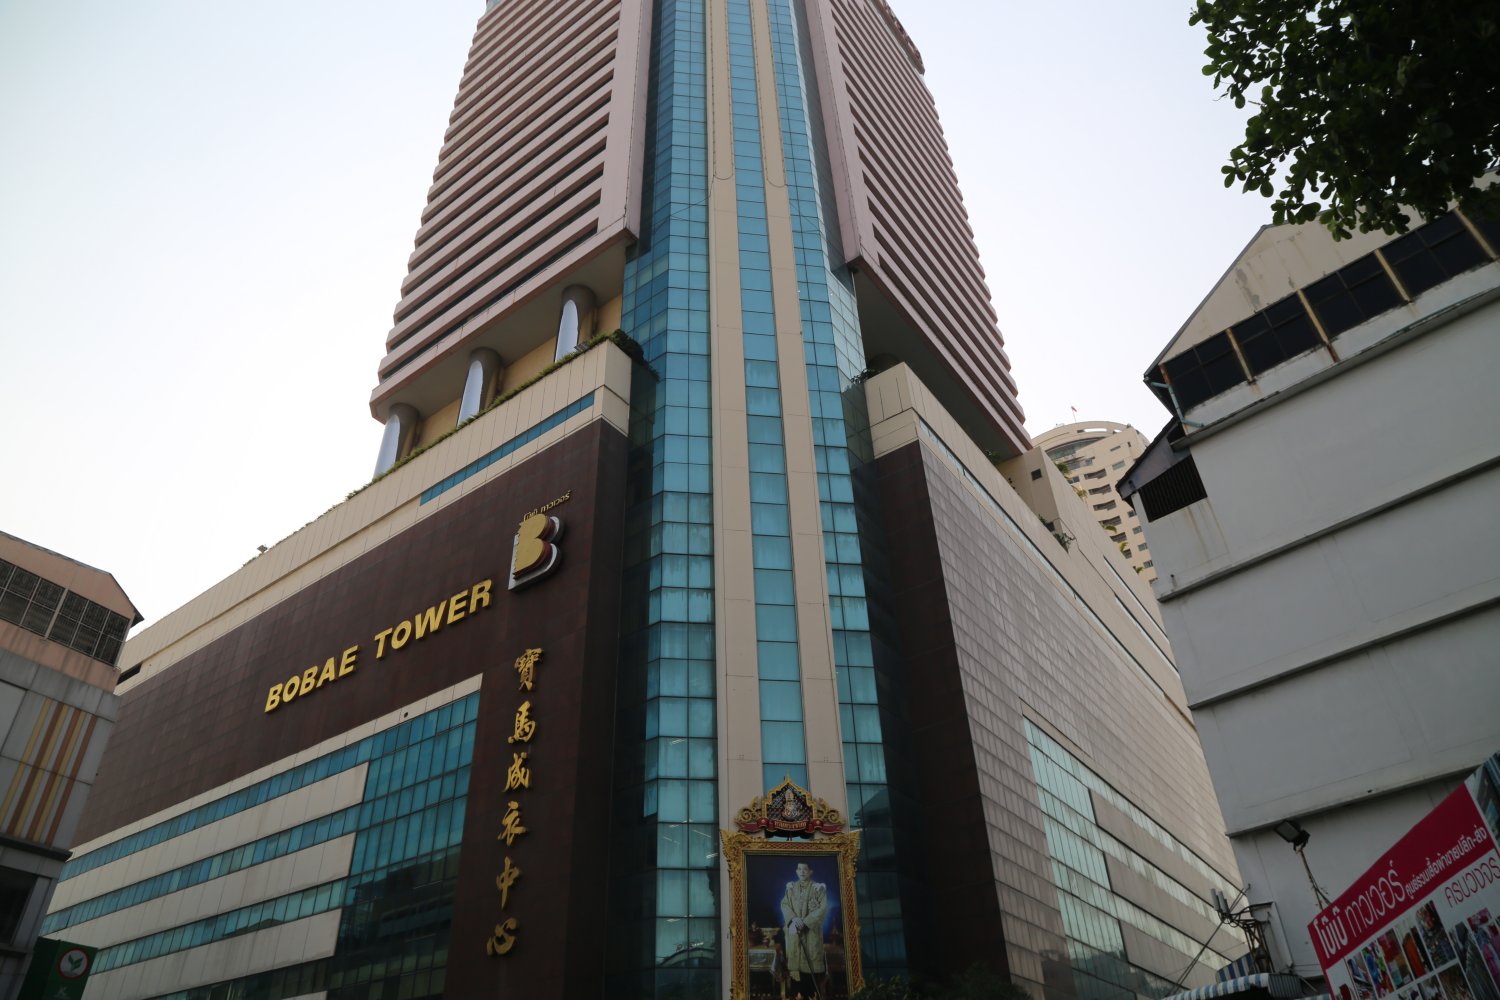 Bobae Market / Bobae Tower